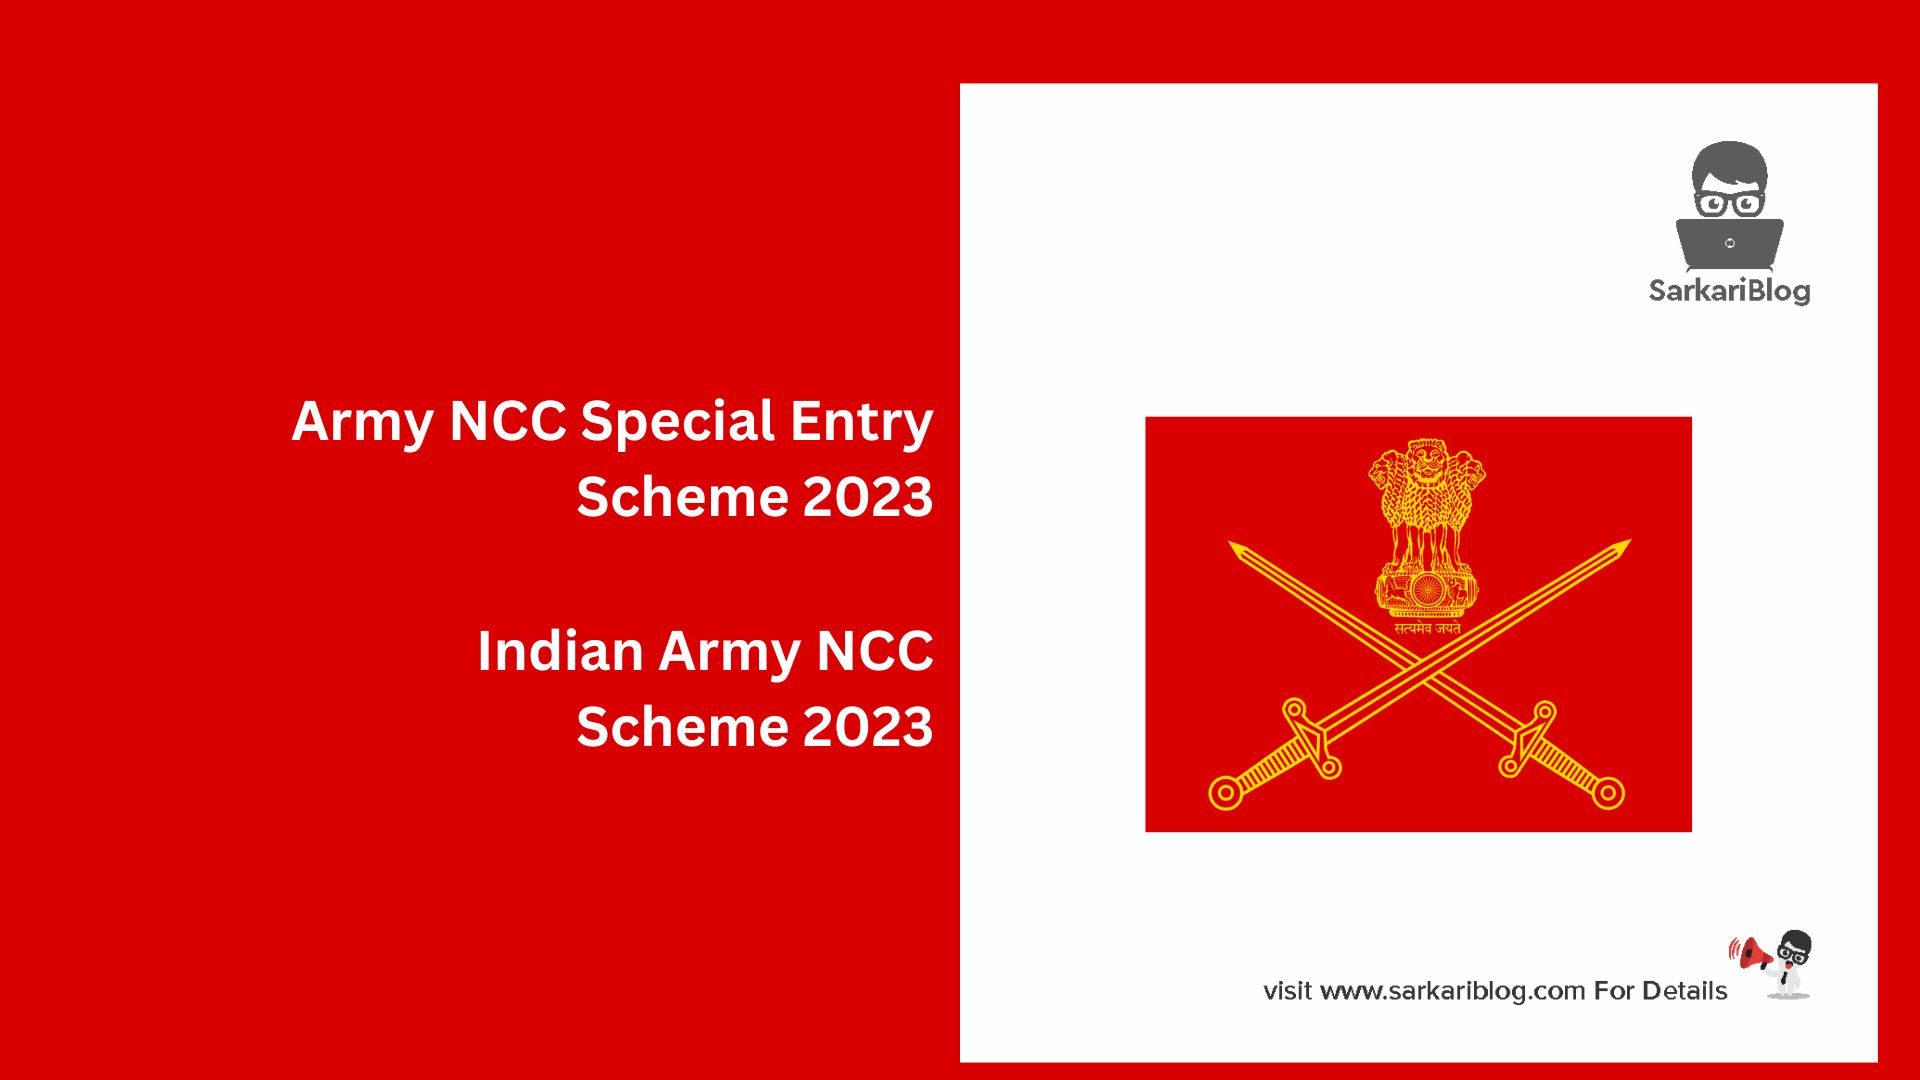 Army NCC Special Entry Scheme 2023